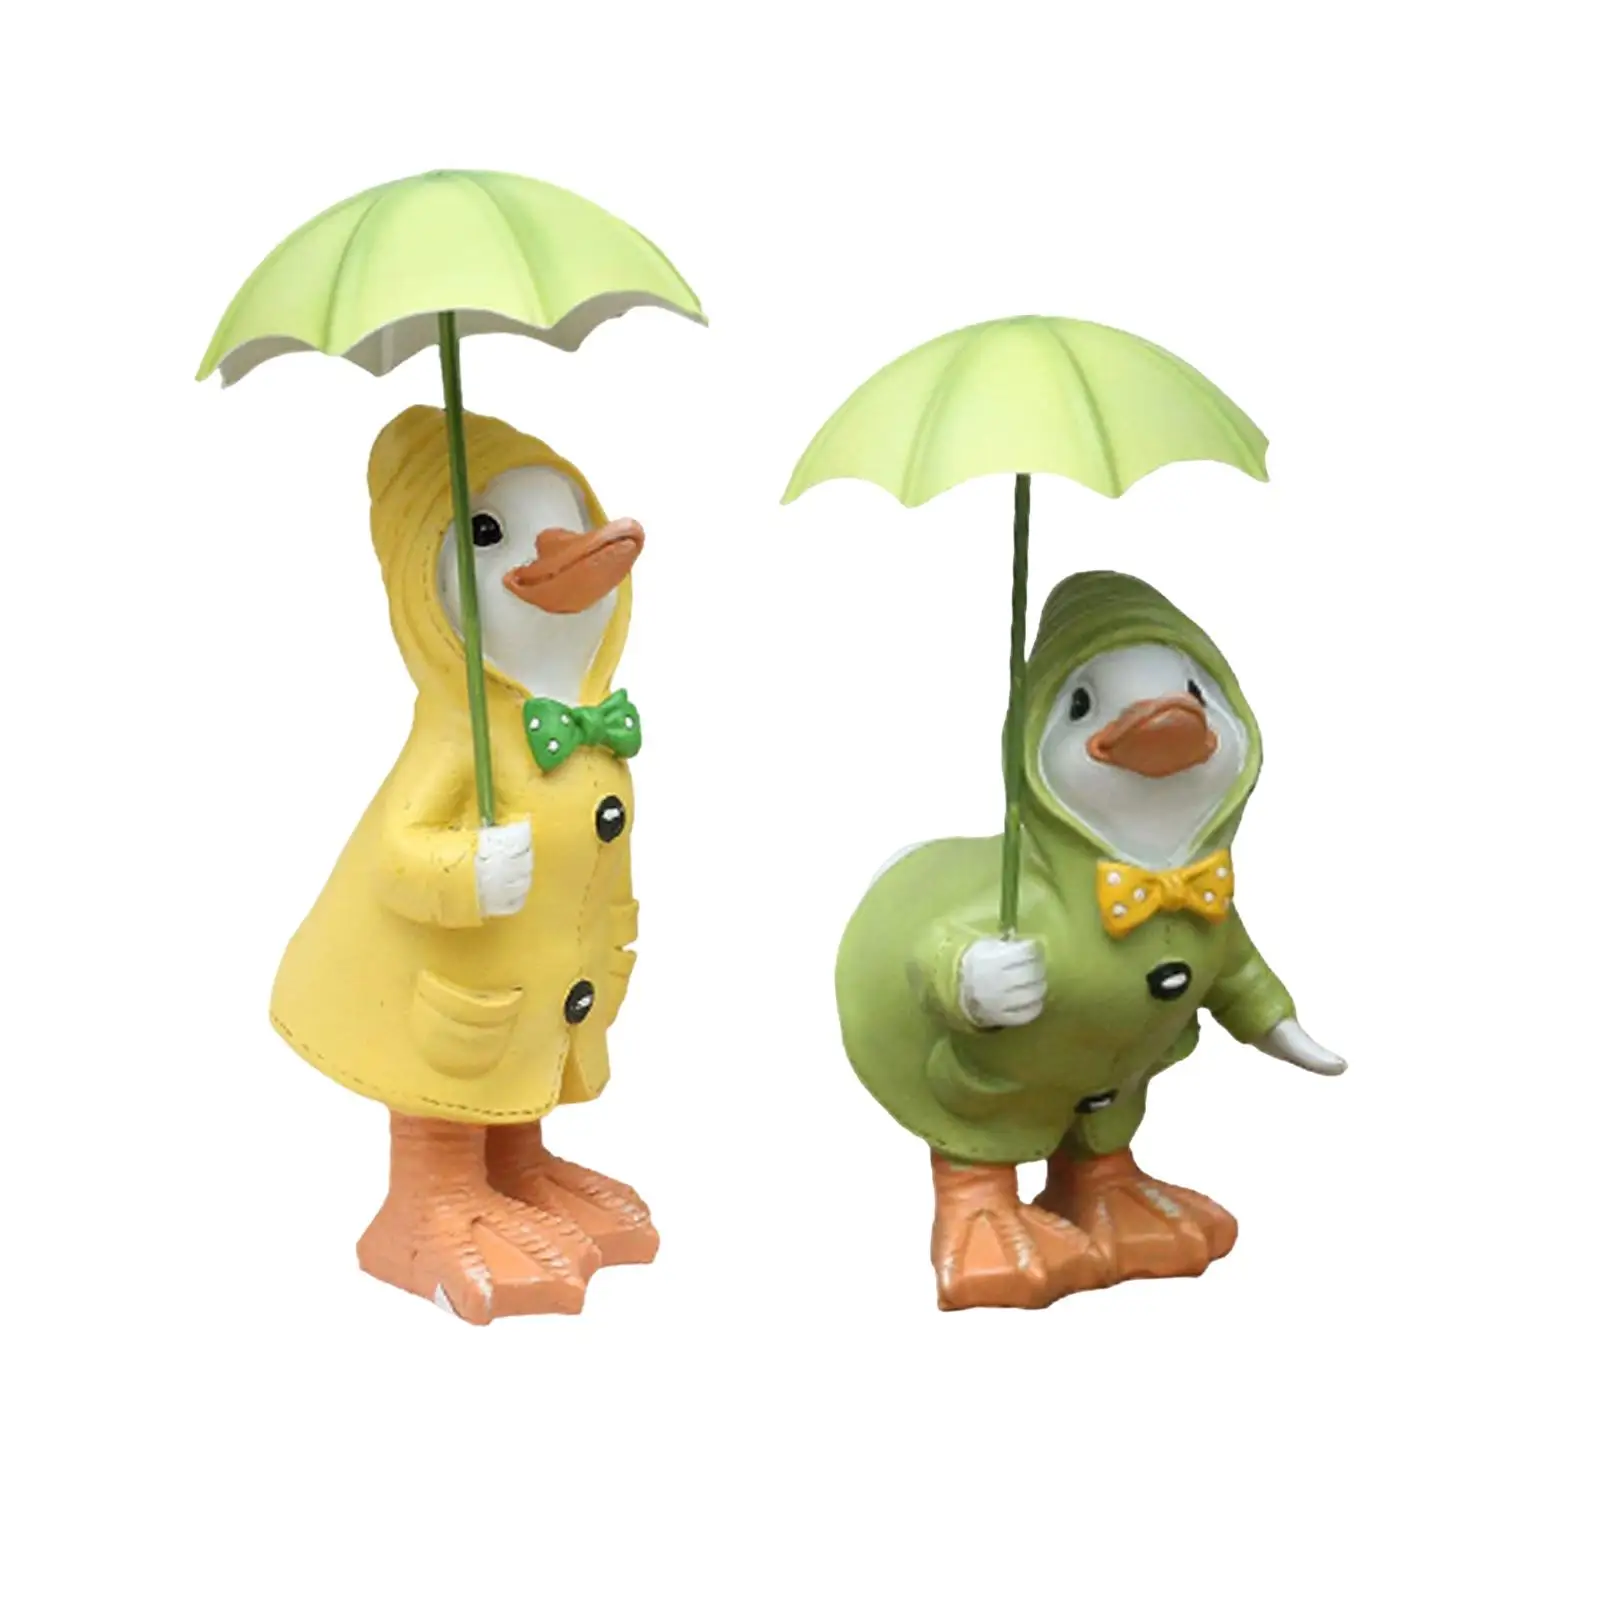 Garden Figurine Desktop Animal Ornament Crafts Raincoat Duck Statue Decor for Outdoor Indoor Home Backyard Yard Lawn